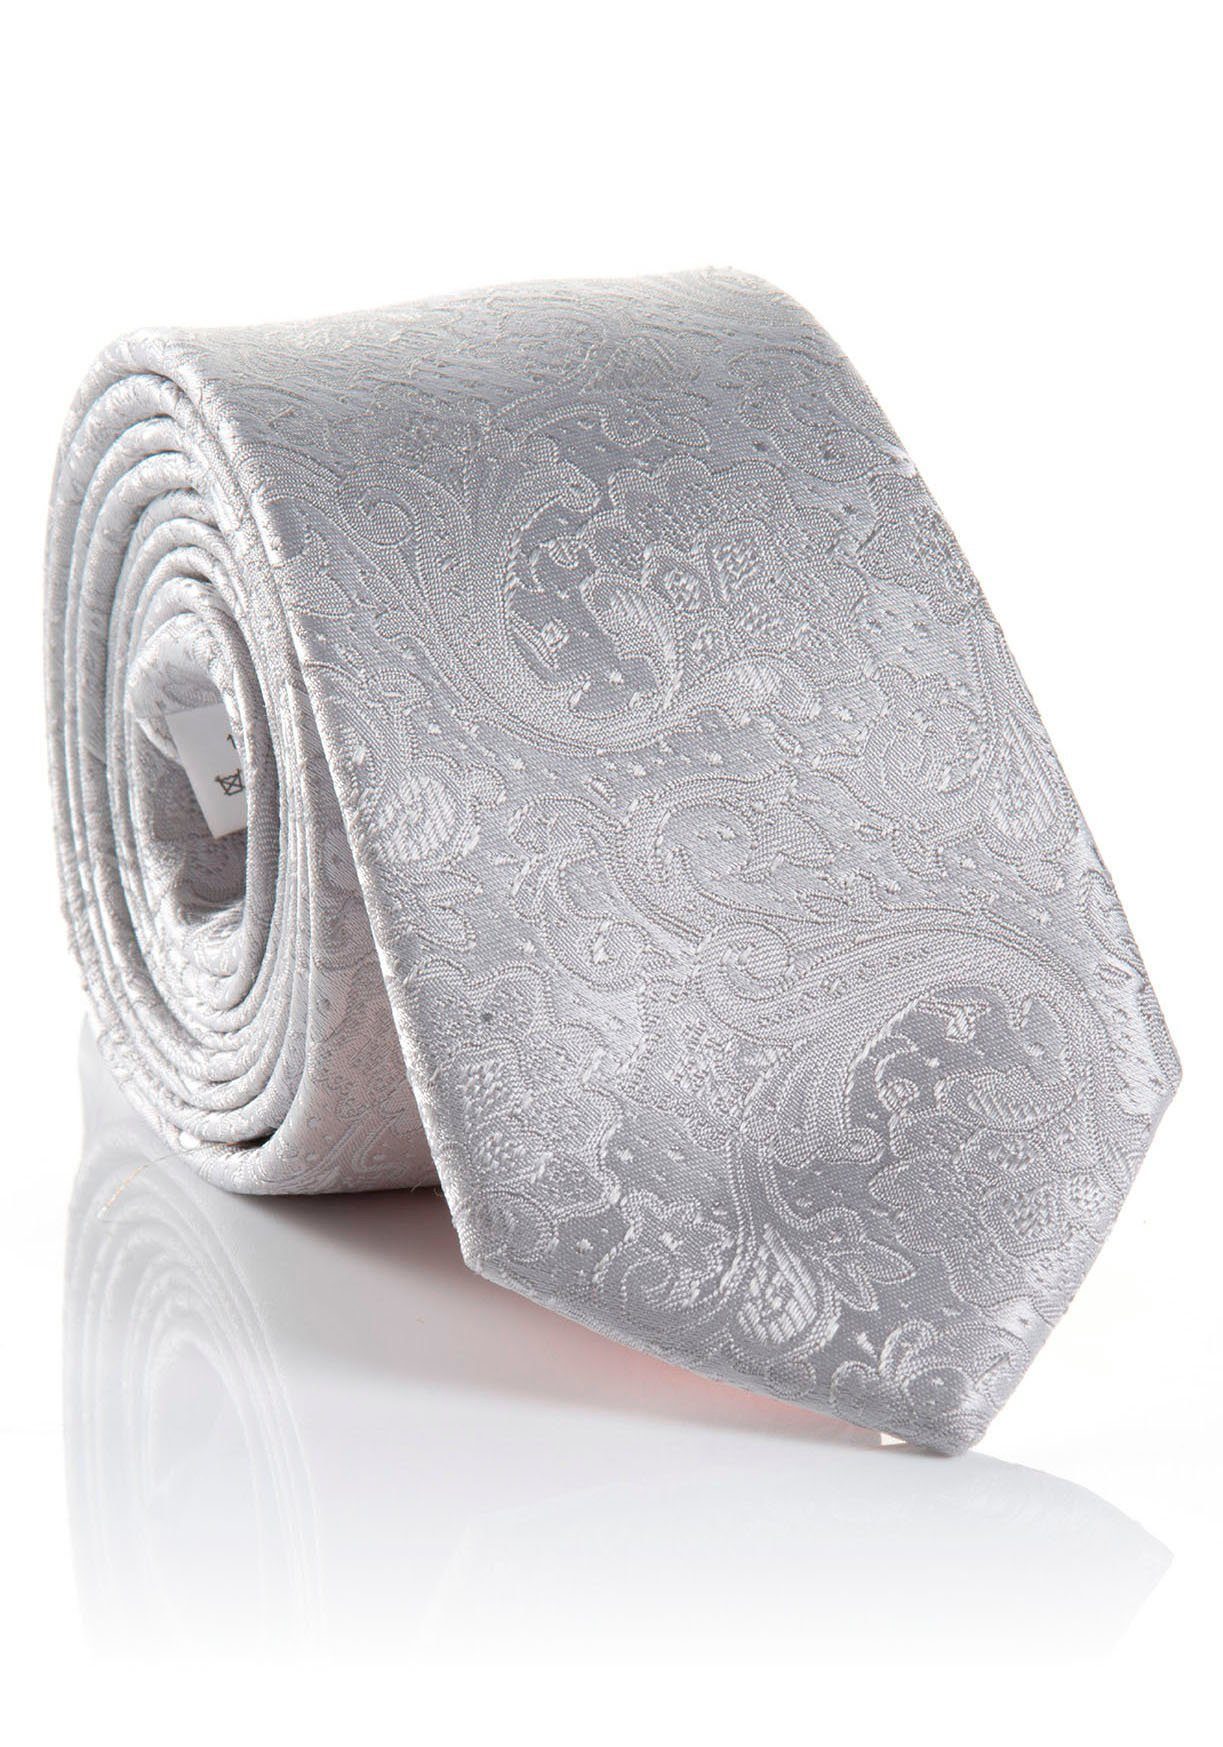 MONTI Krawatte LELIO Krawatte aus reiner Paisley-Muster silver Seide